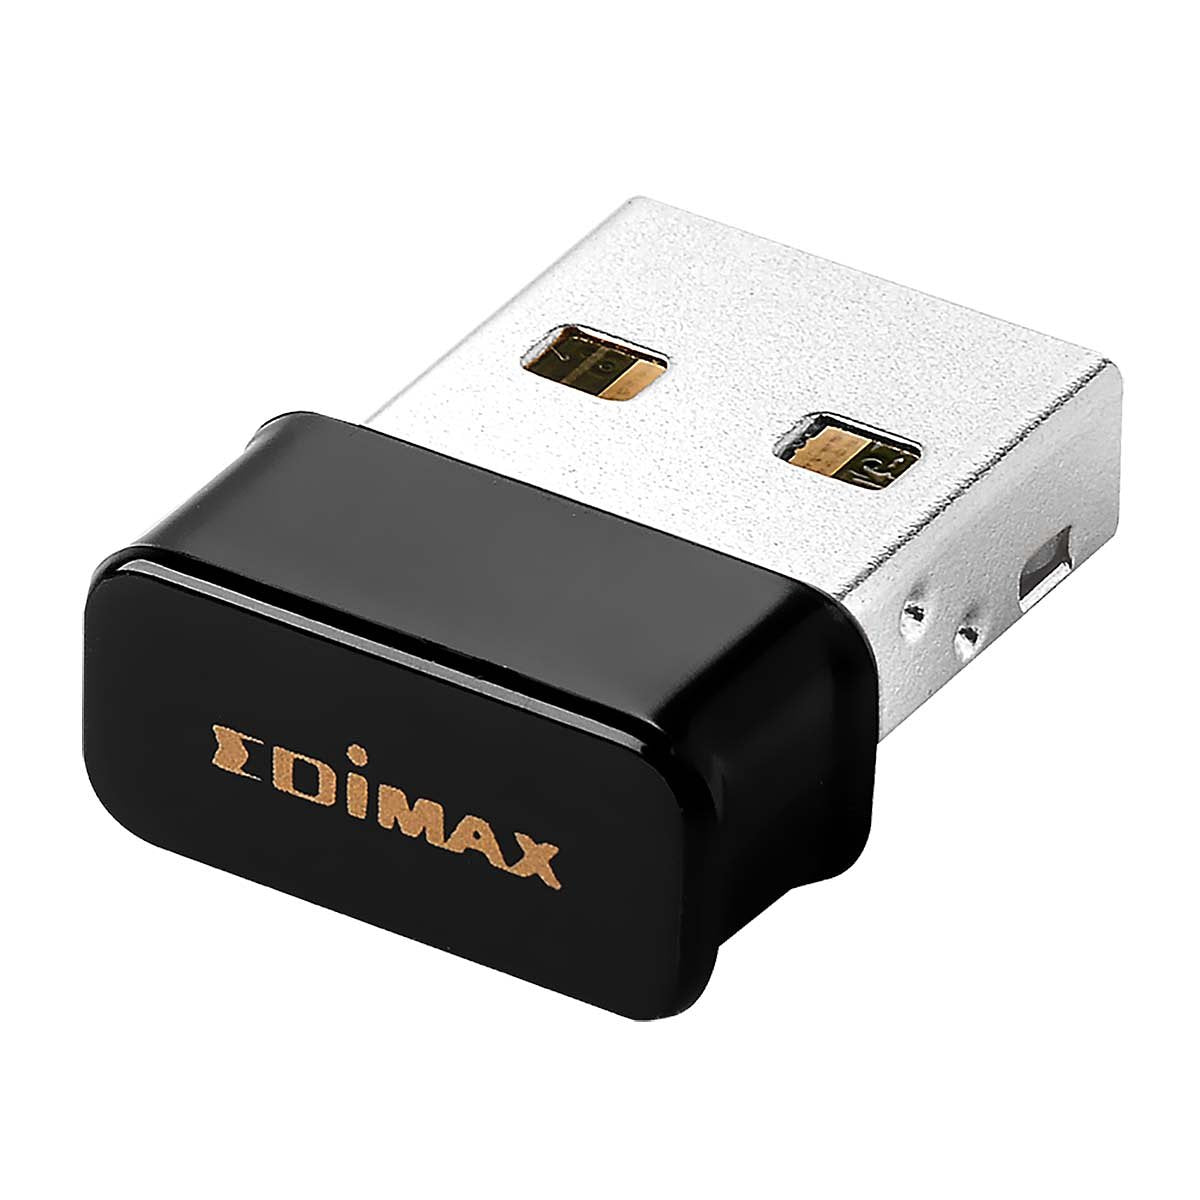 Edimax Draadloze Wi-Fi & Bluetooth Dongel N150 2.4 GHz Zwart